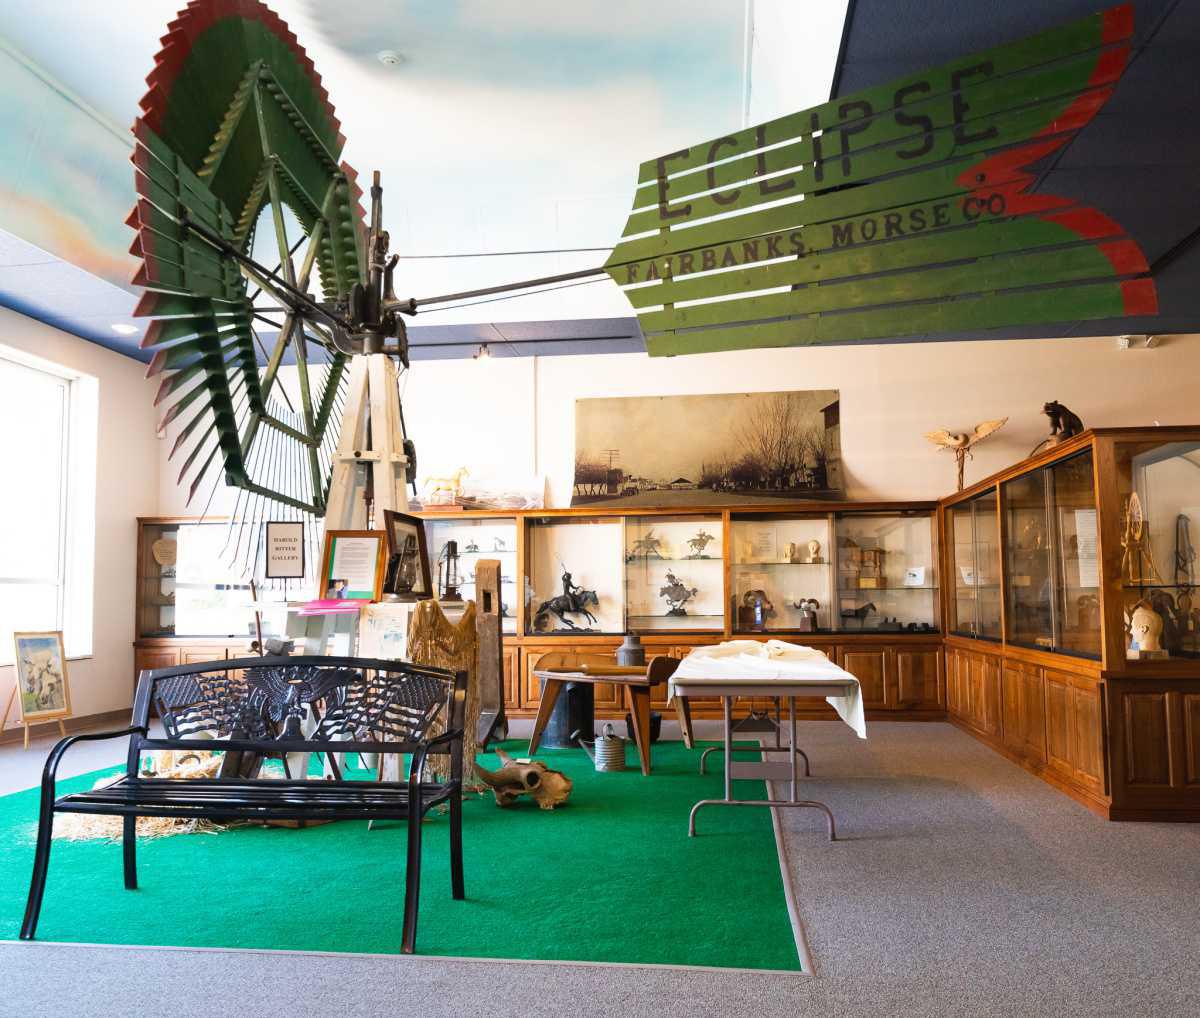 Antelope County Museum